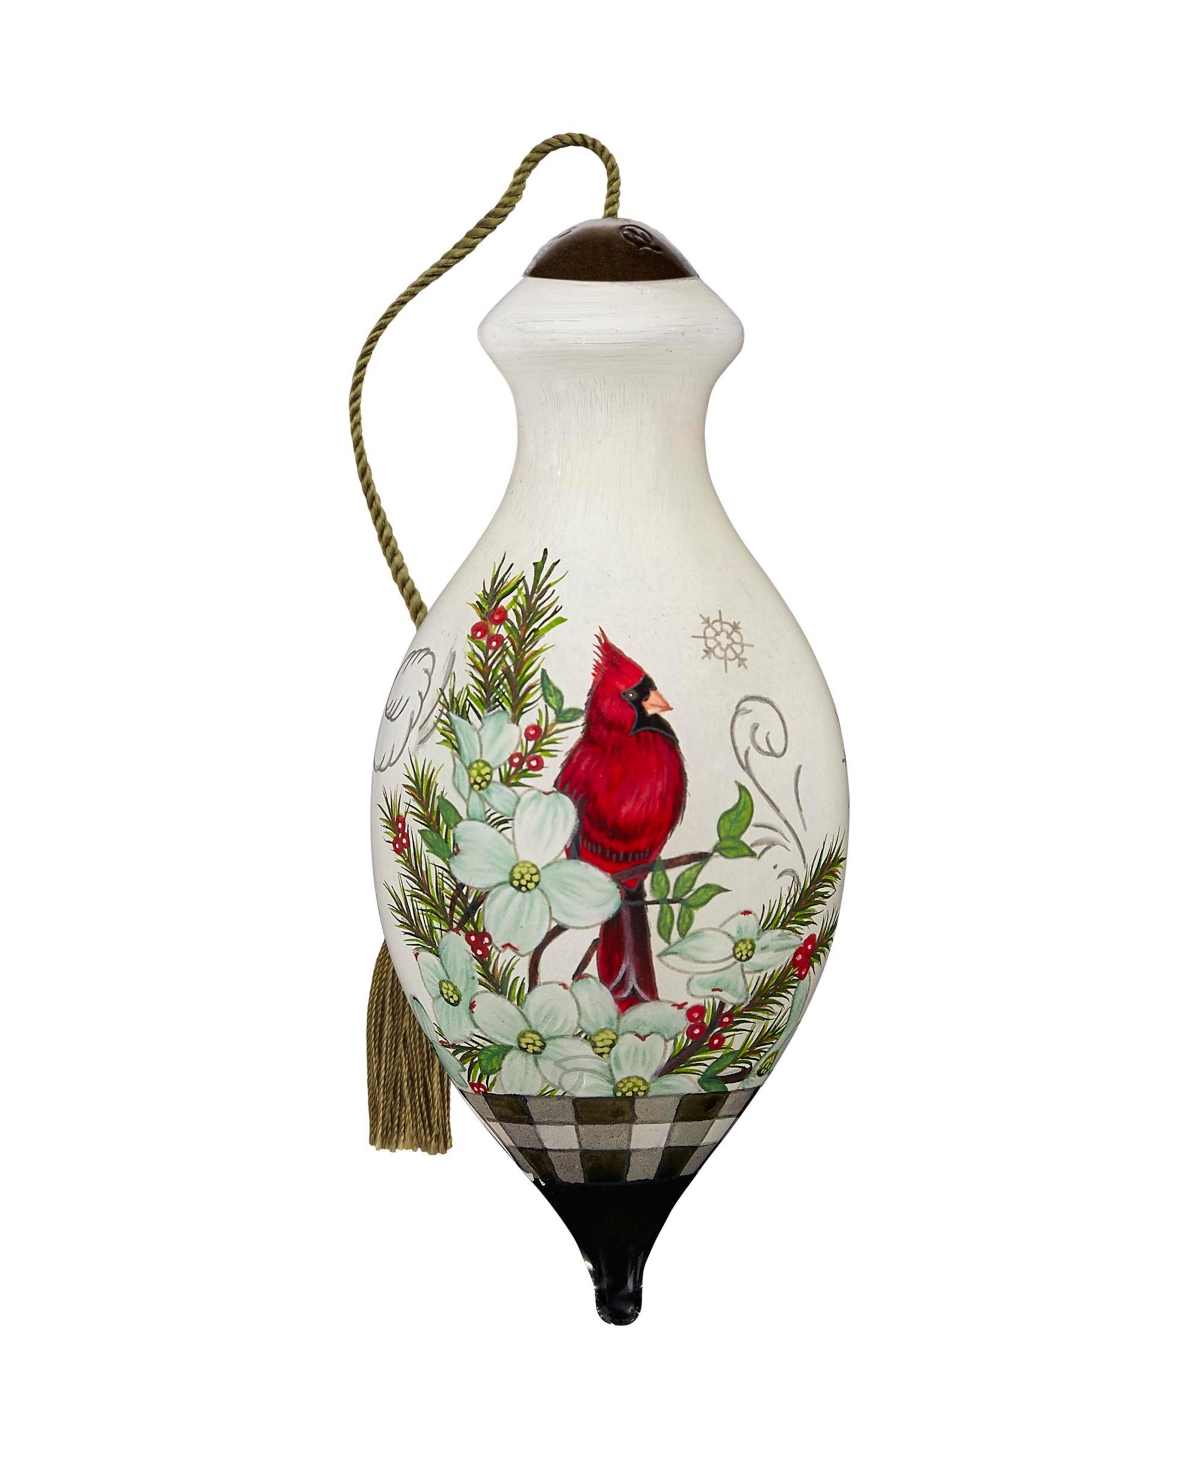 Precious Moments Ne'qwa Art 7221128 Regal Winter Cardinal Hand-painted Blown Glass Ornament In Multicolor